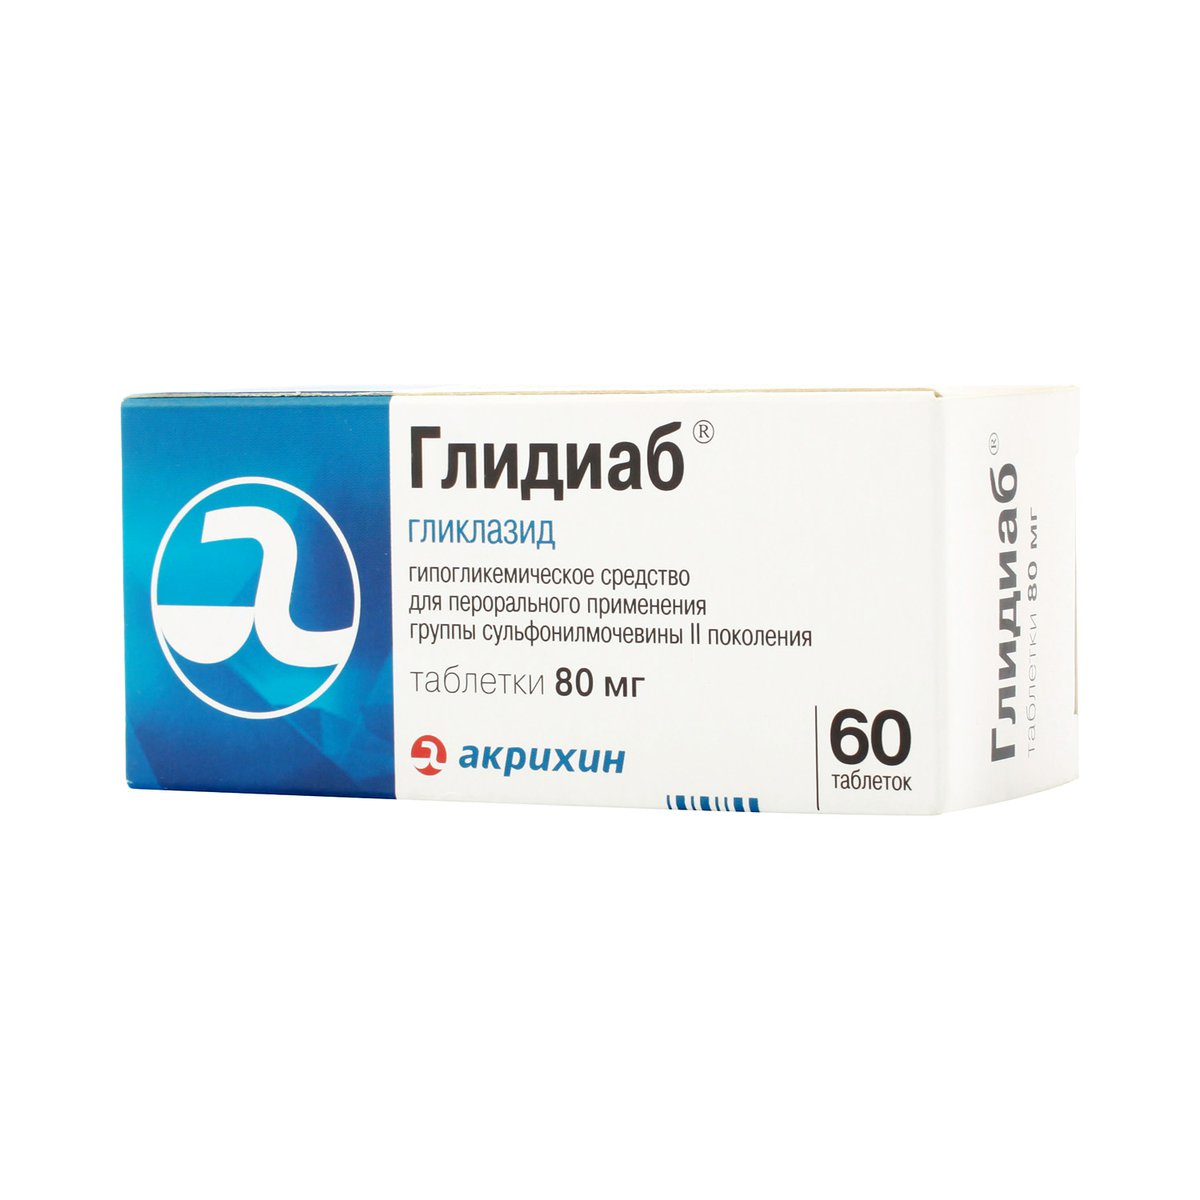 Глидиаб (таблетки, 60 шт, 80 мг, для приема внутрь) - цена,  .